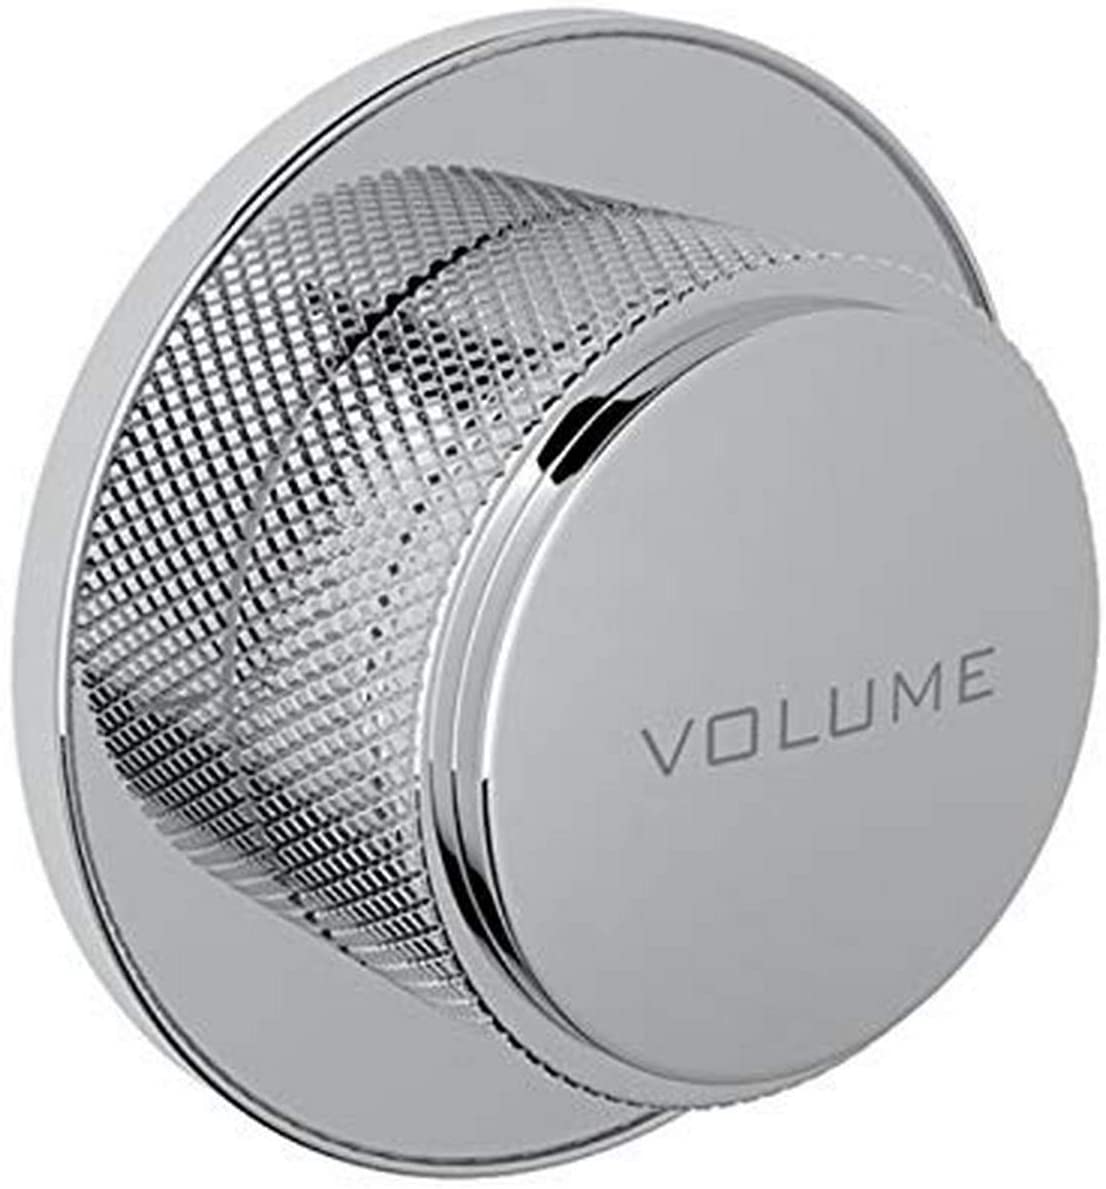 Graceline 3/4" Volume Control Valve Trim Only in Polished Chrome